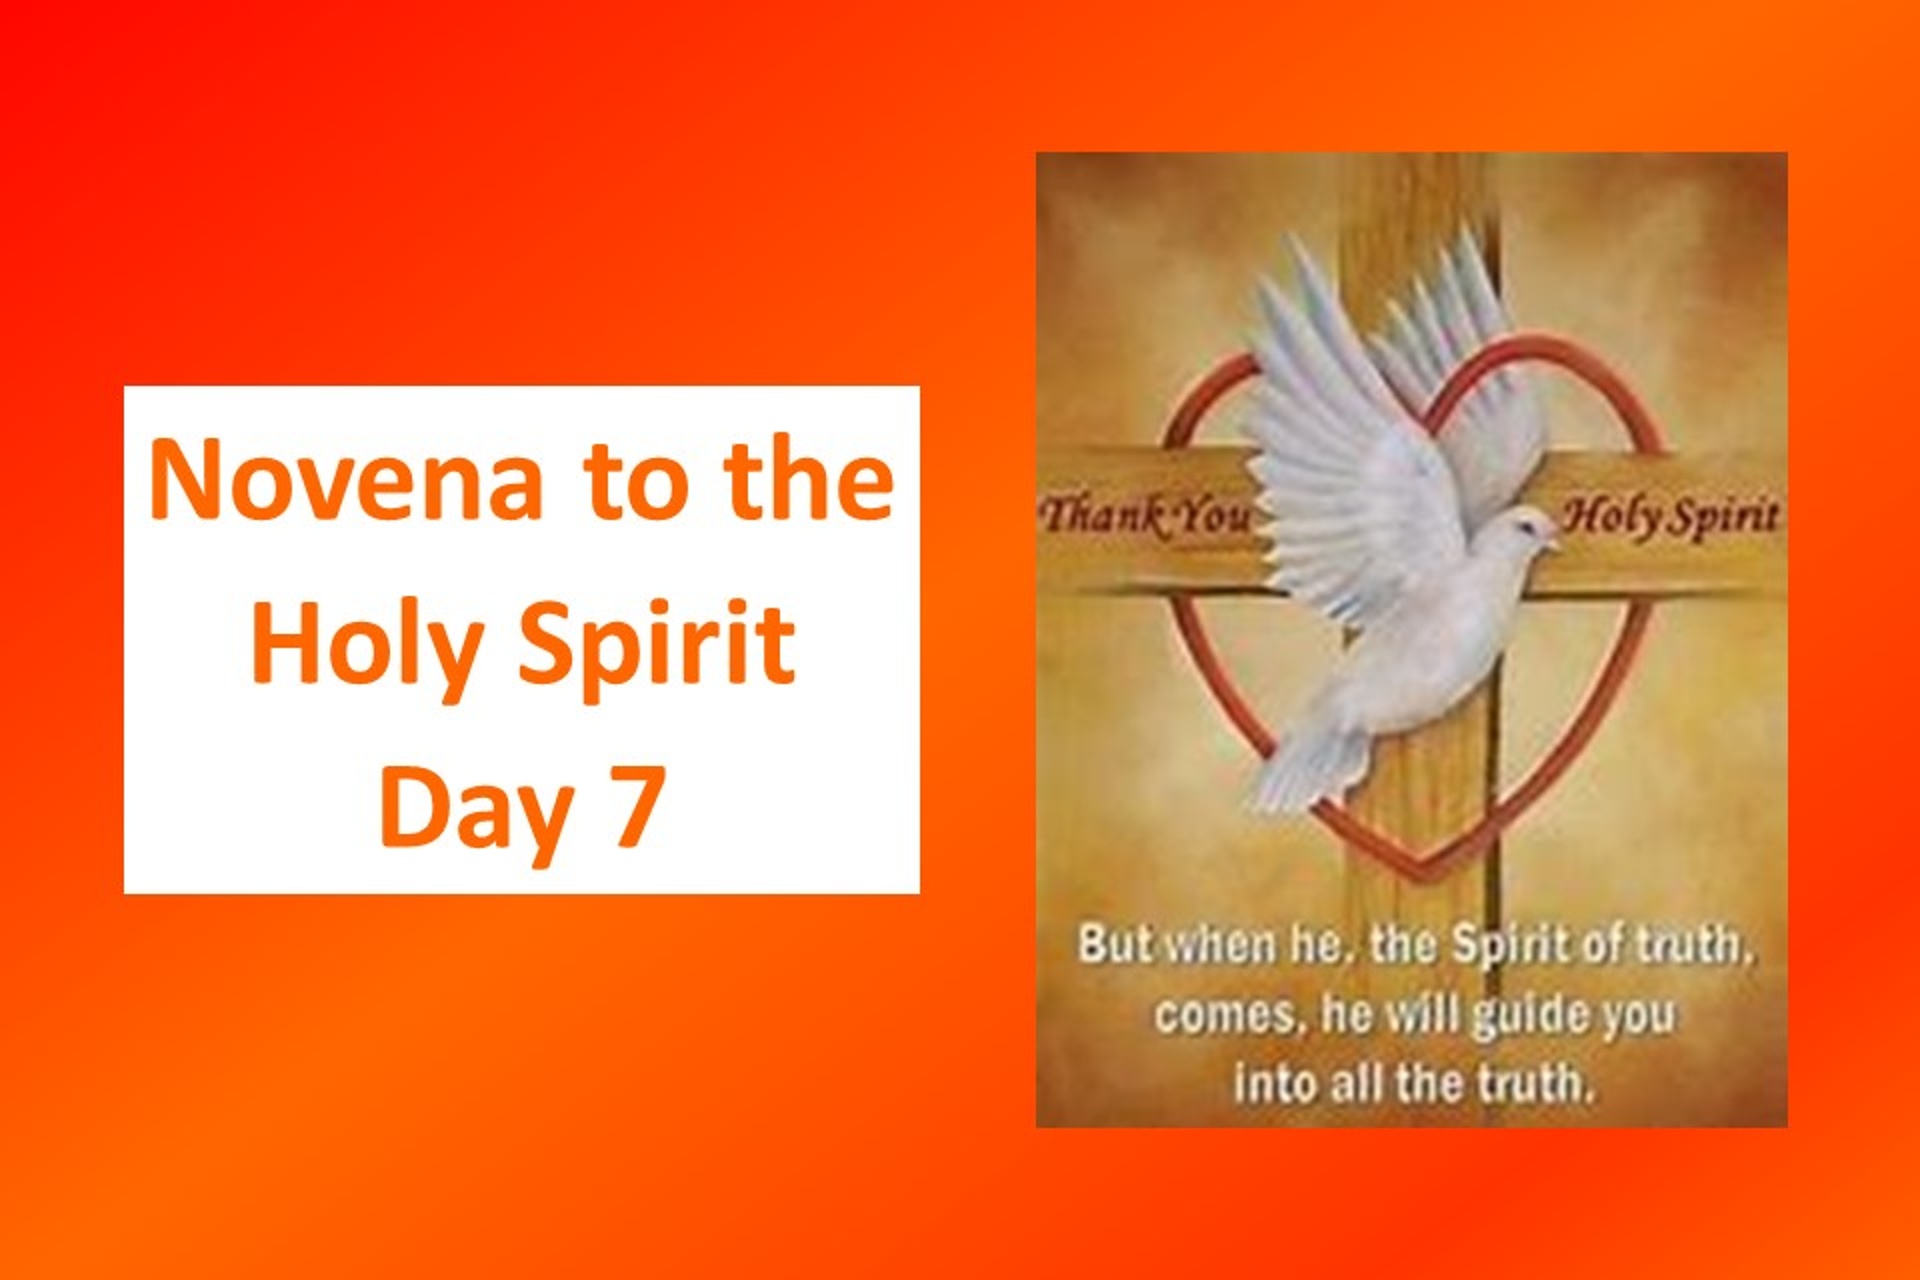 Novena to the Holy Spirit - Day 7